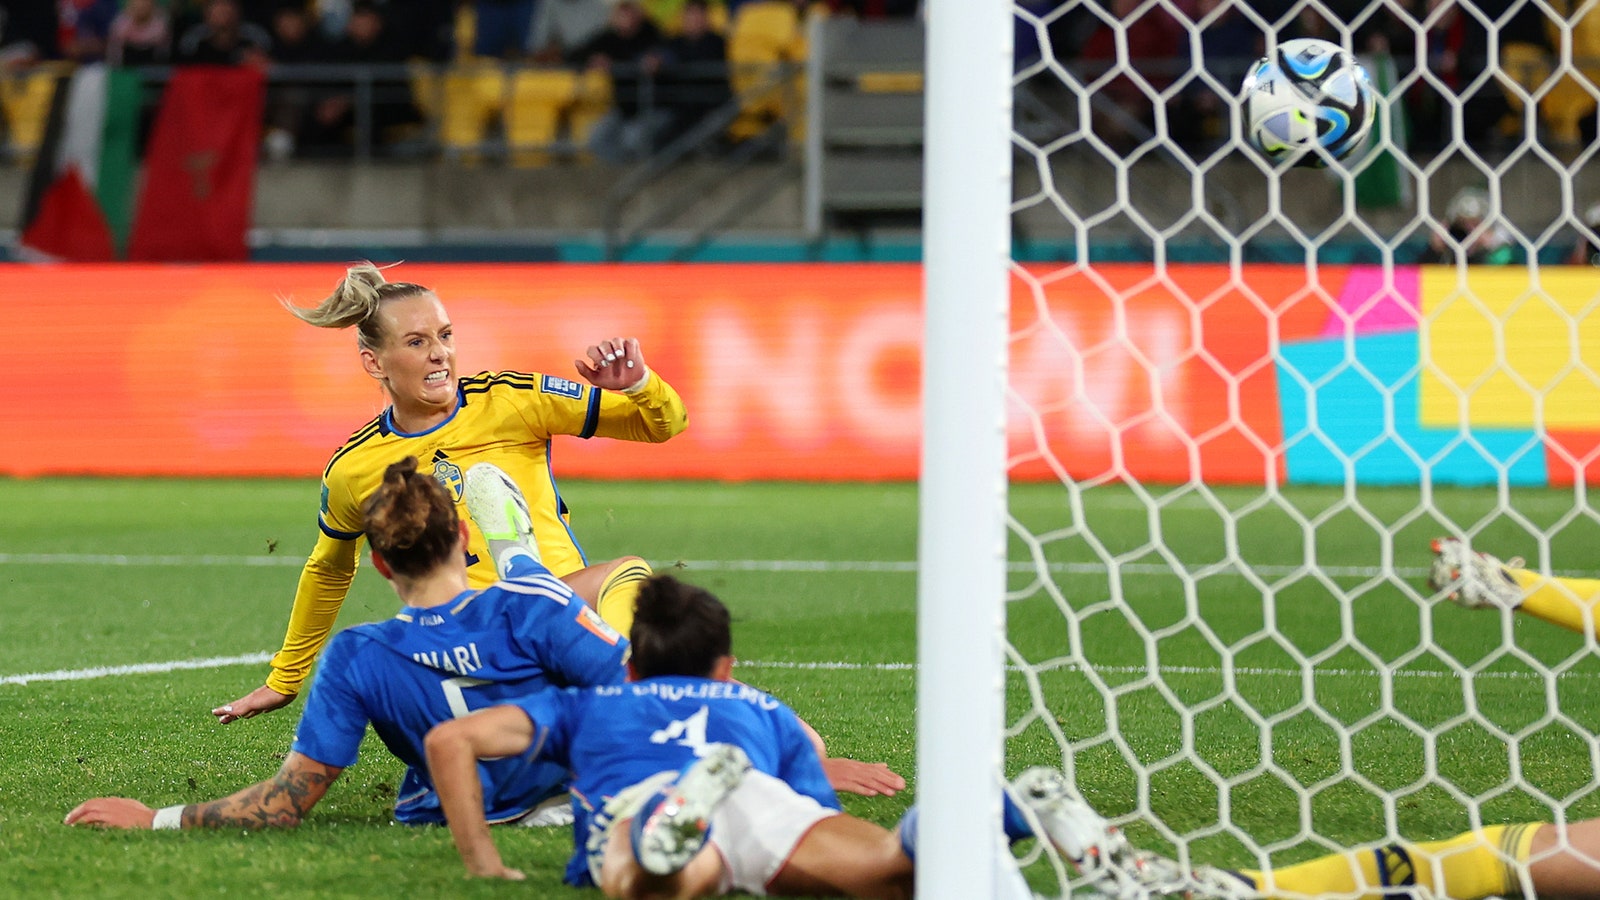 Stina Blackstenius puts Sweden up 3-0 before halftime